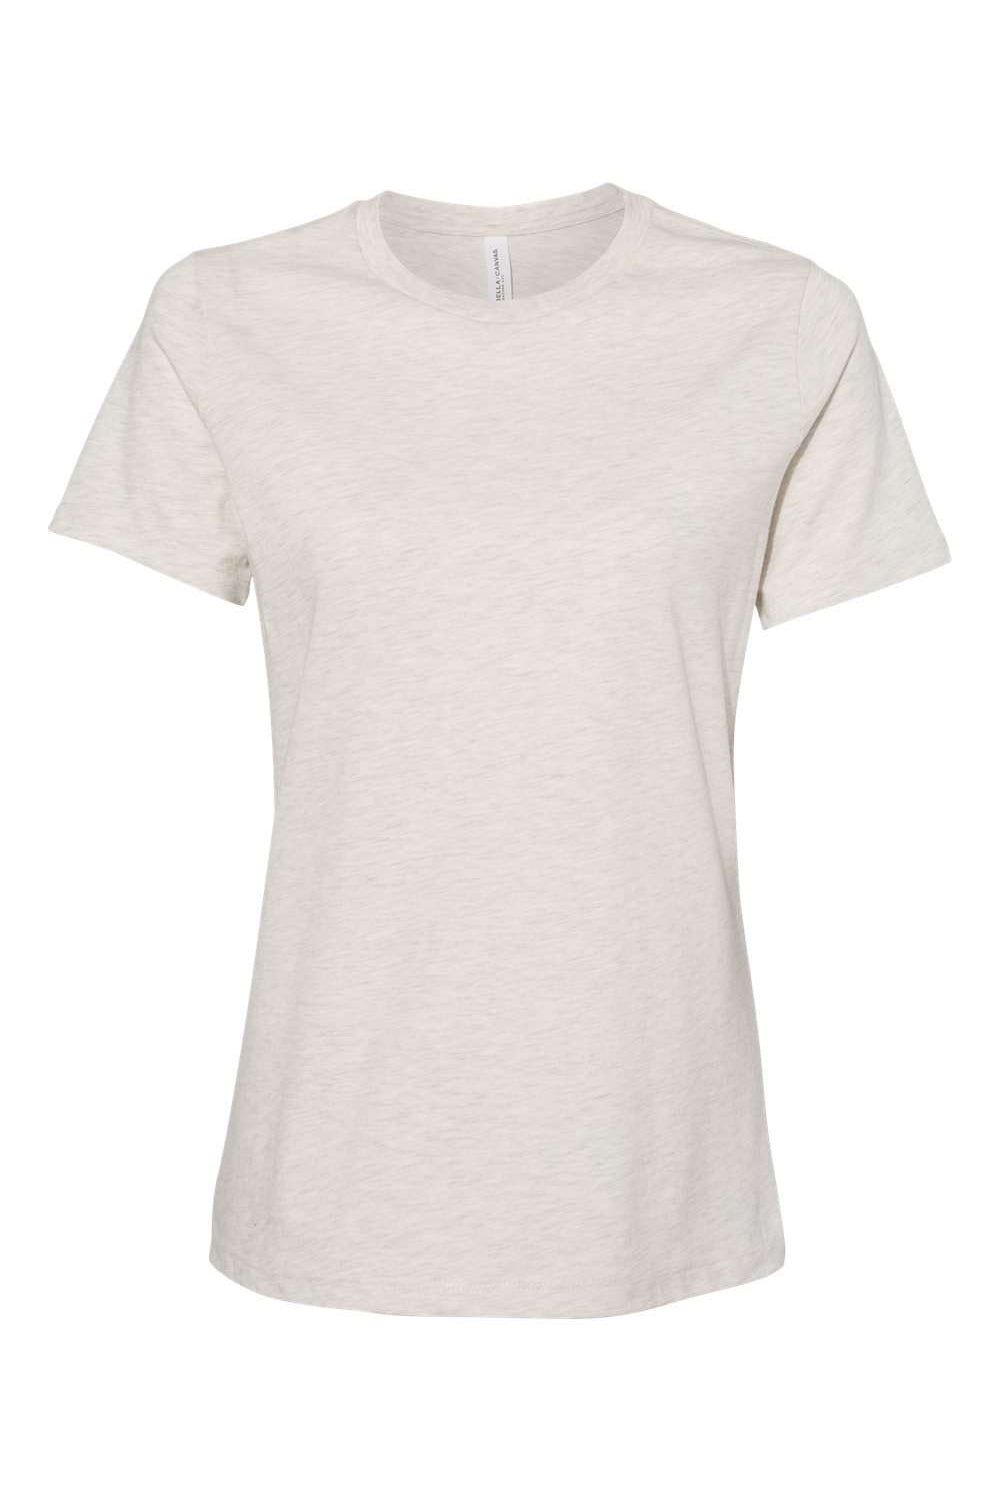 Bella + Canvas BC6400CVC/6400CVC Womens CVC Short Sleeve Crewneck T-Shirt Heather Prism Natural Flat Front